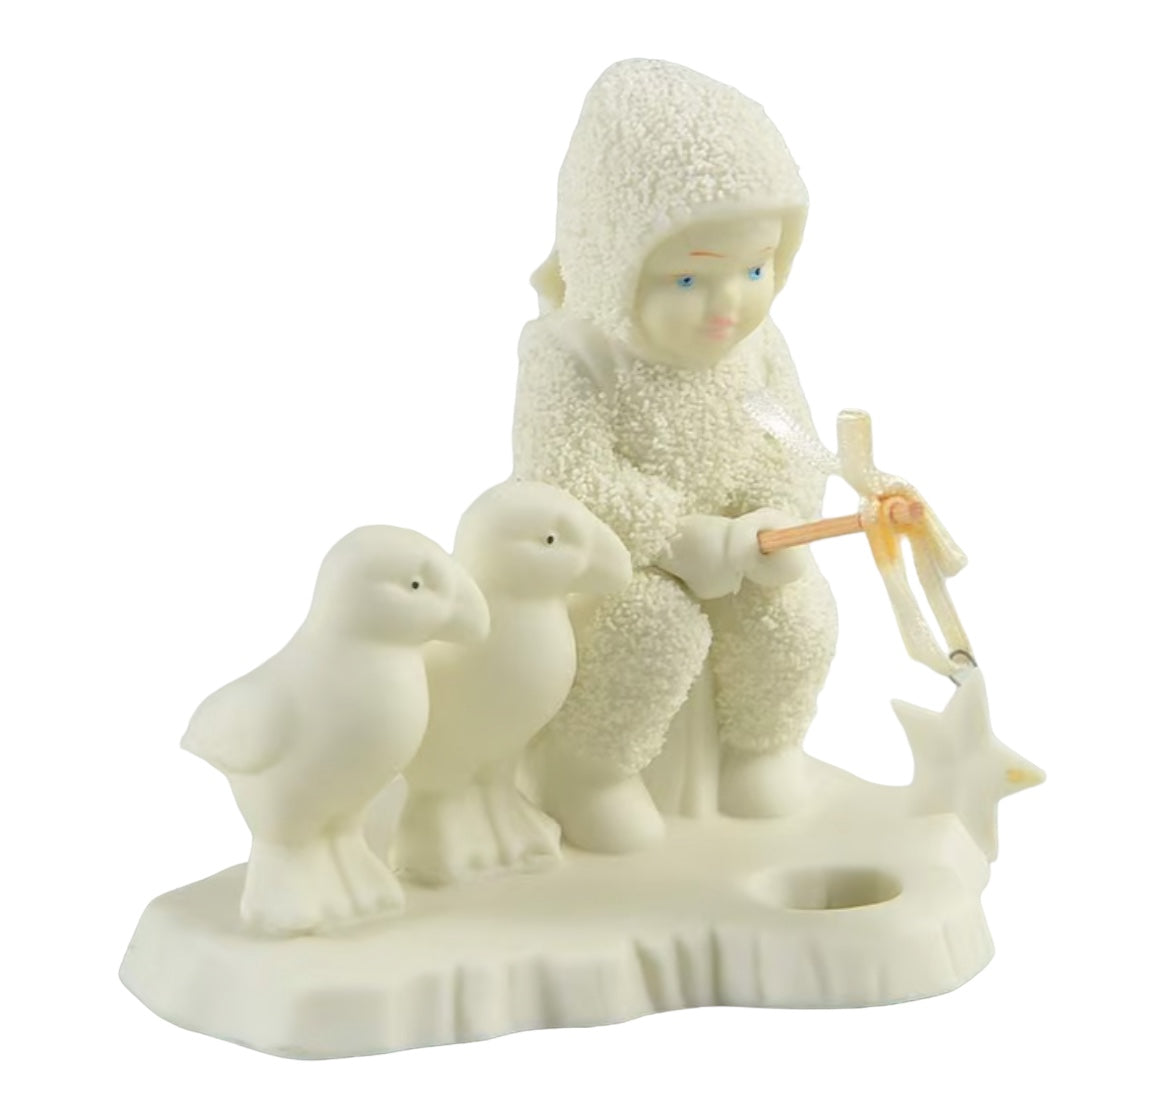 Snowbabies - Fishing For Dreams Figurine